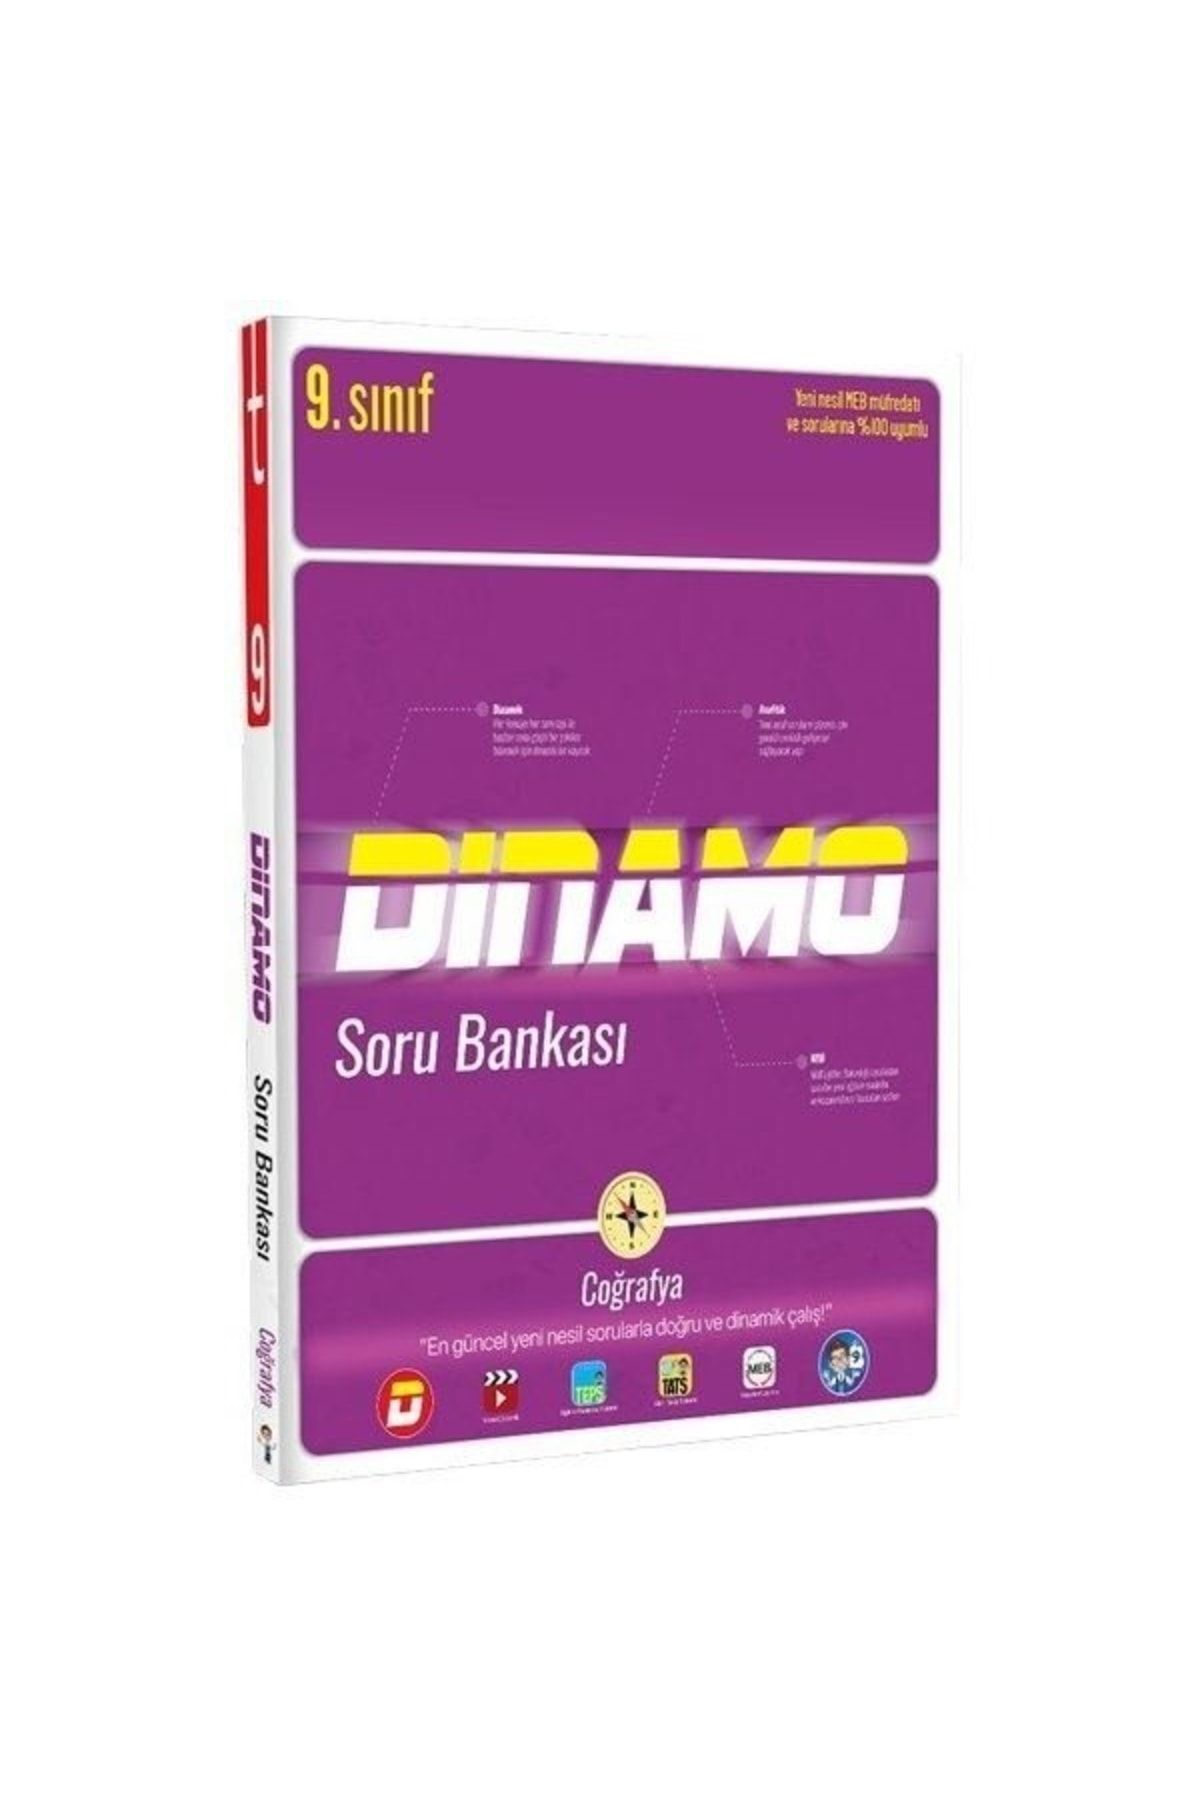 Tonguç Yayınları 9.sınıf Dinamo Coğrafya Soru Bankası